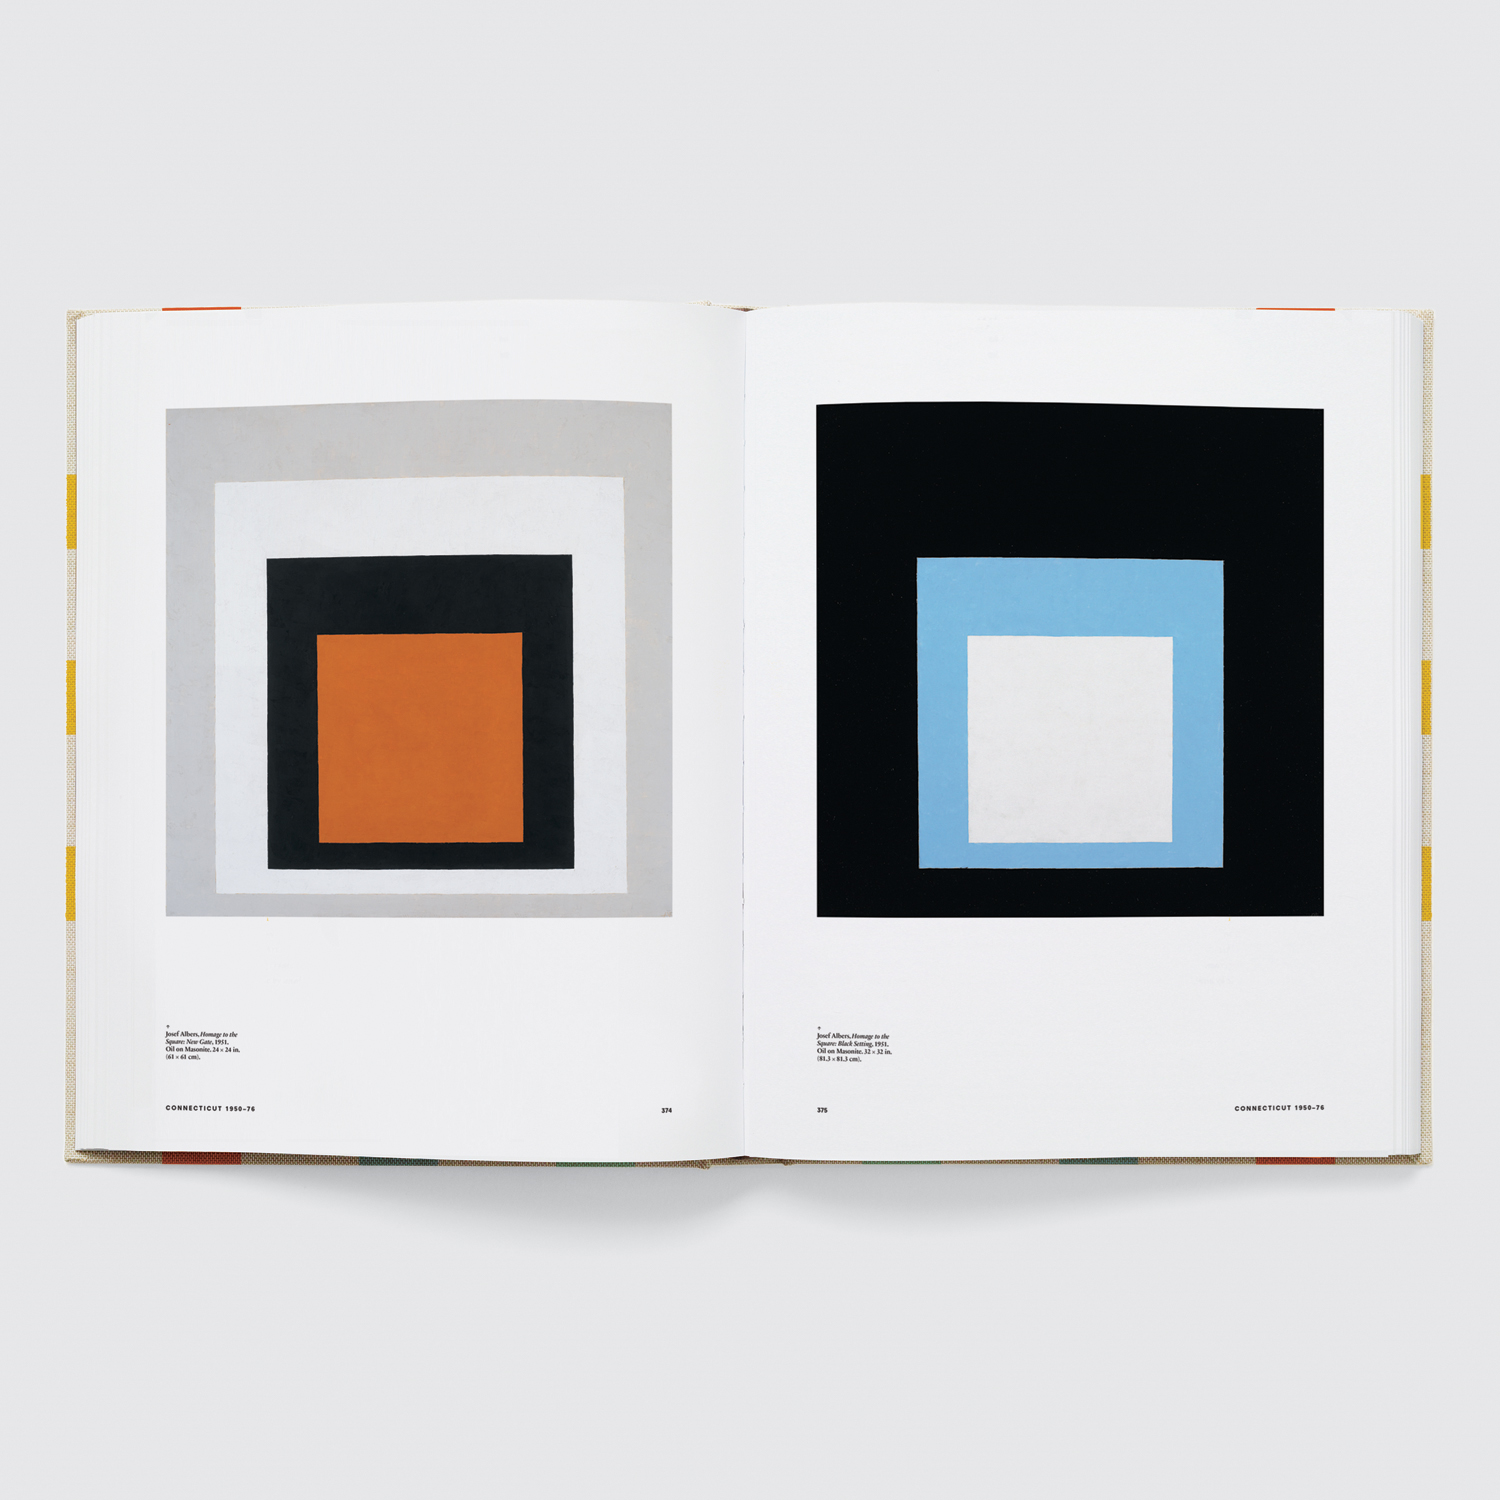 A spread from Anni & Josef Albers